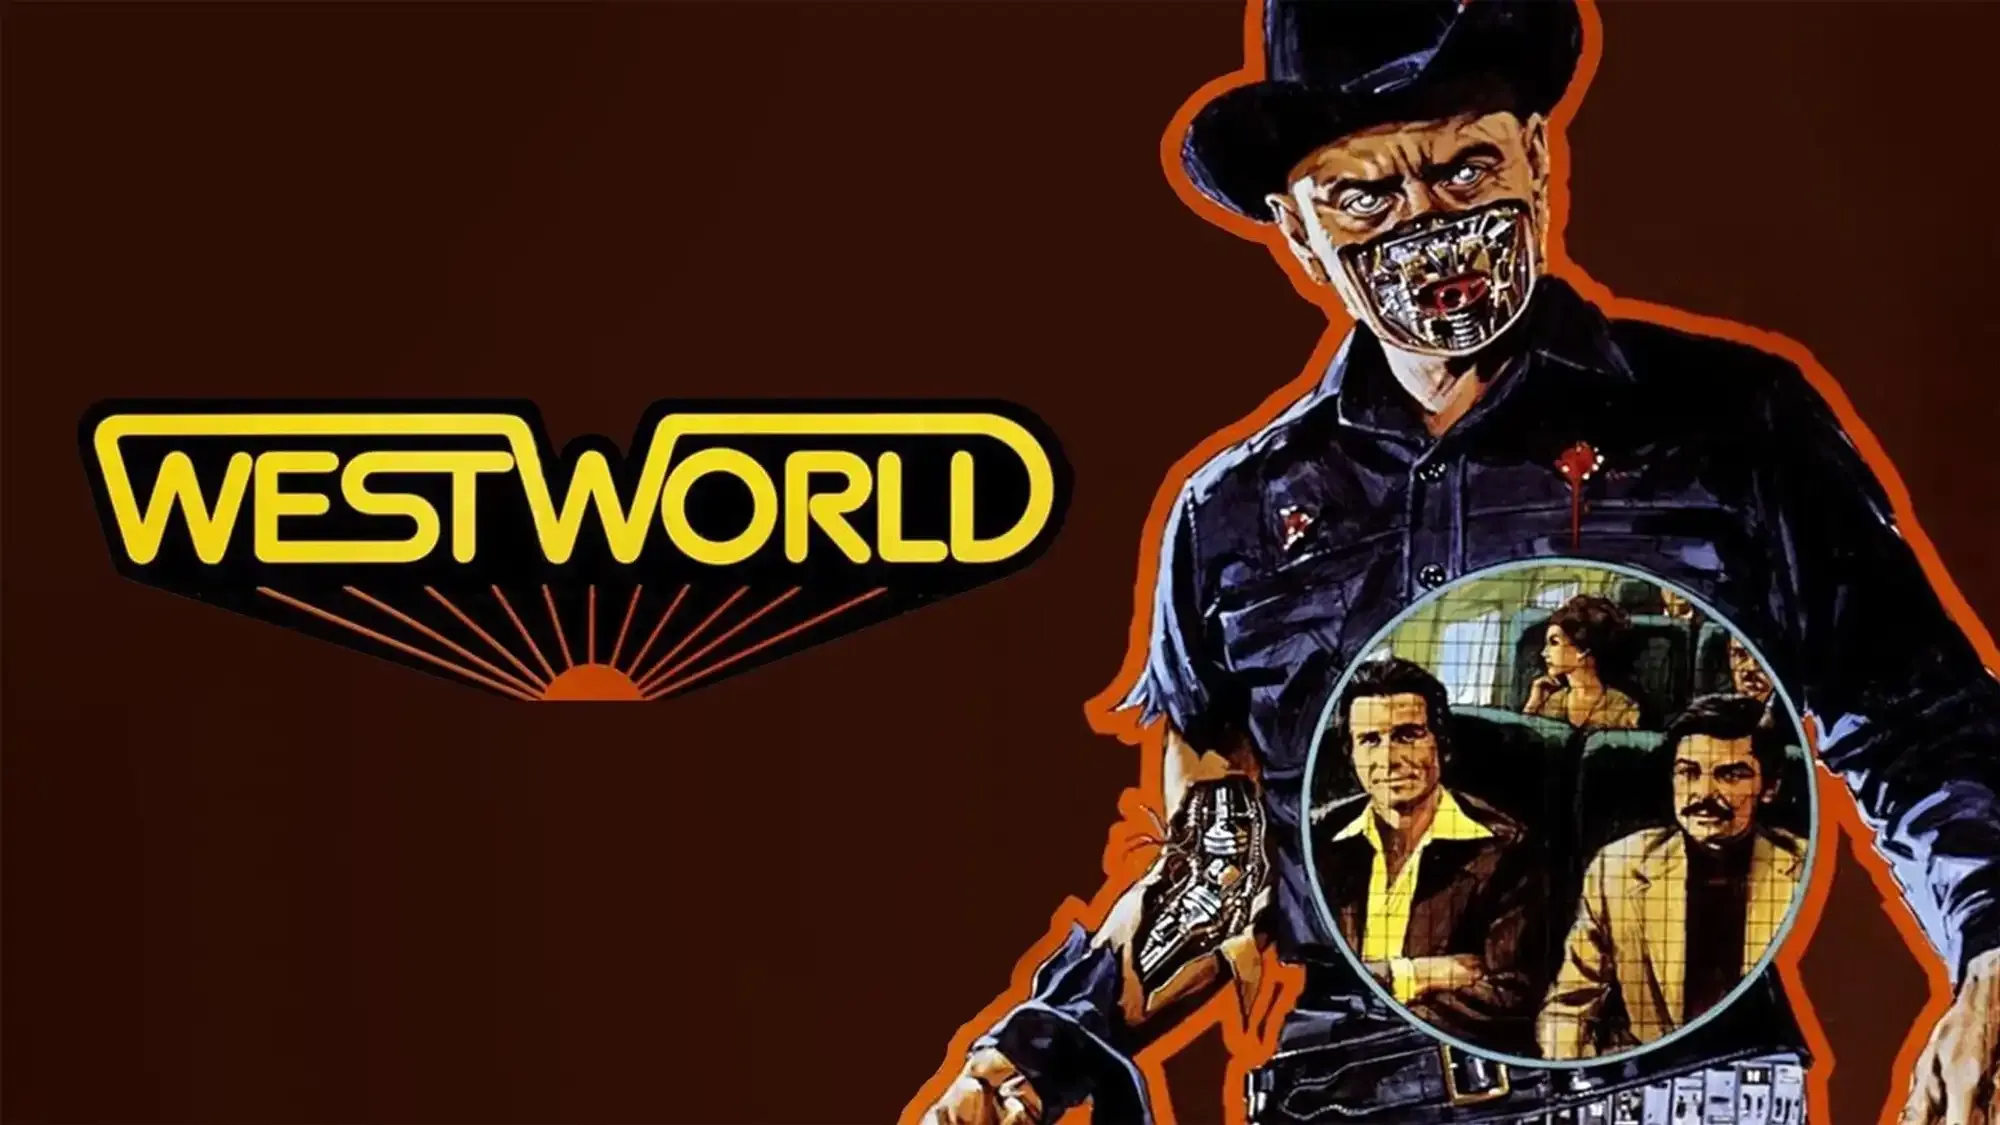 Westworld movie review